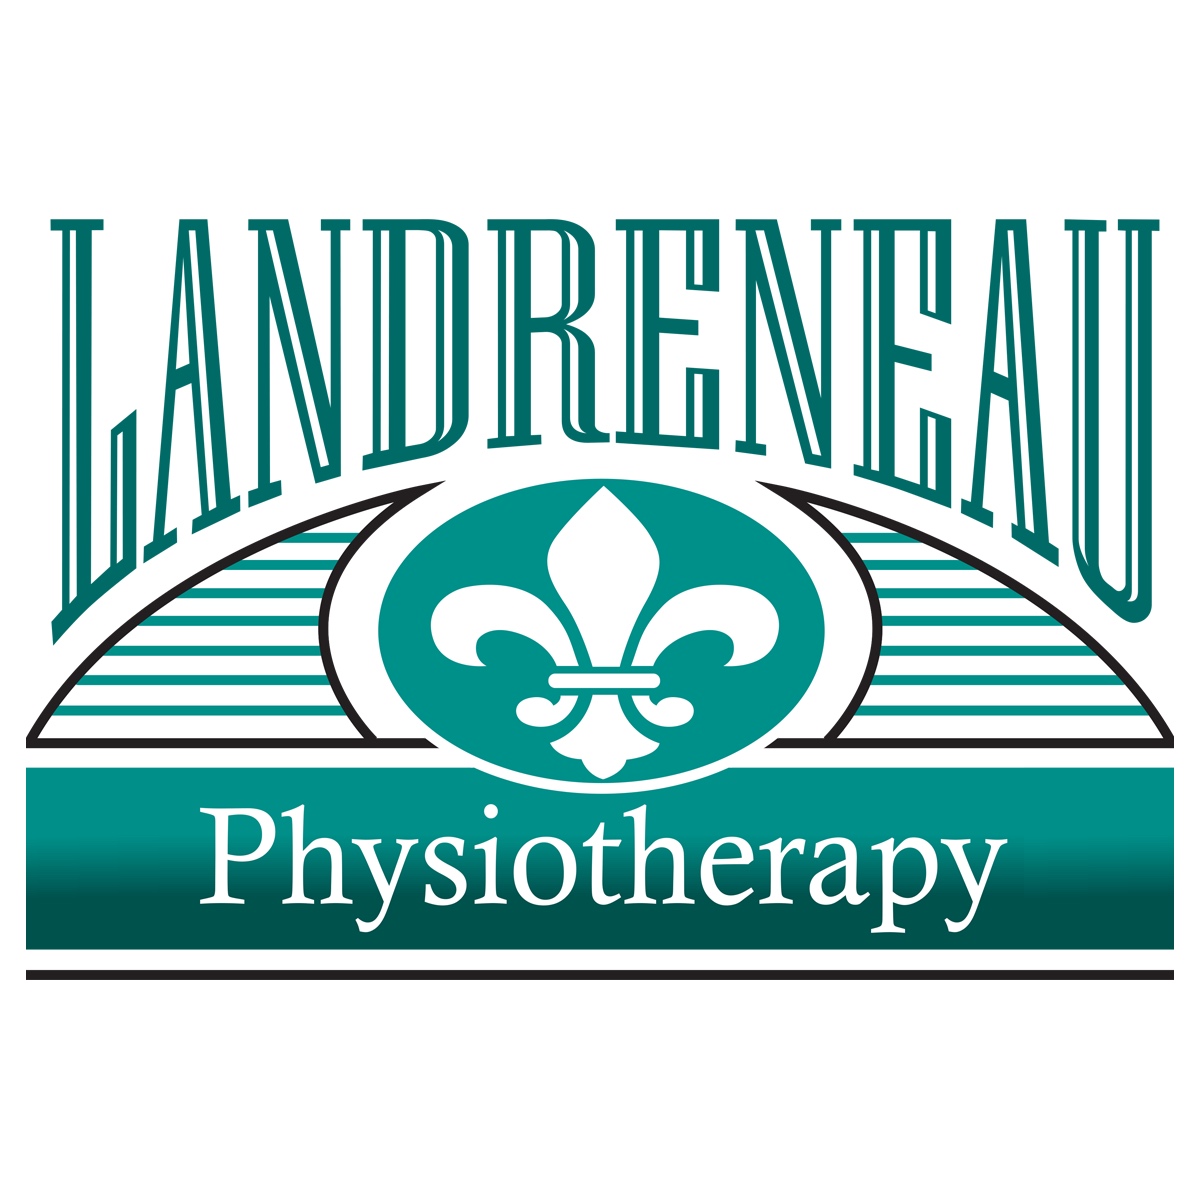 Landreneau Physiotherapy, LLC